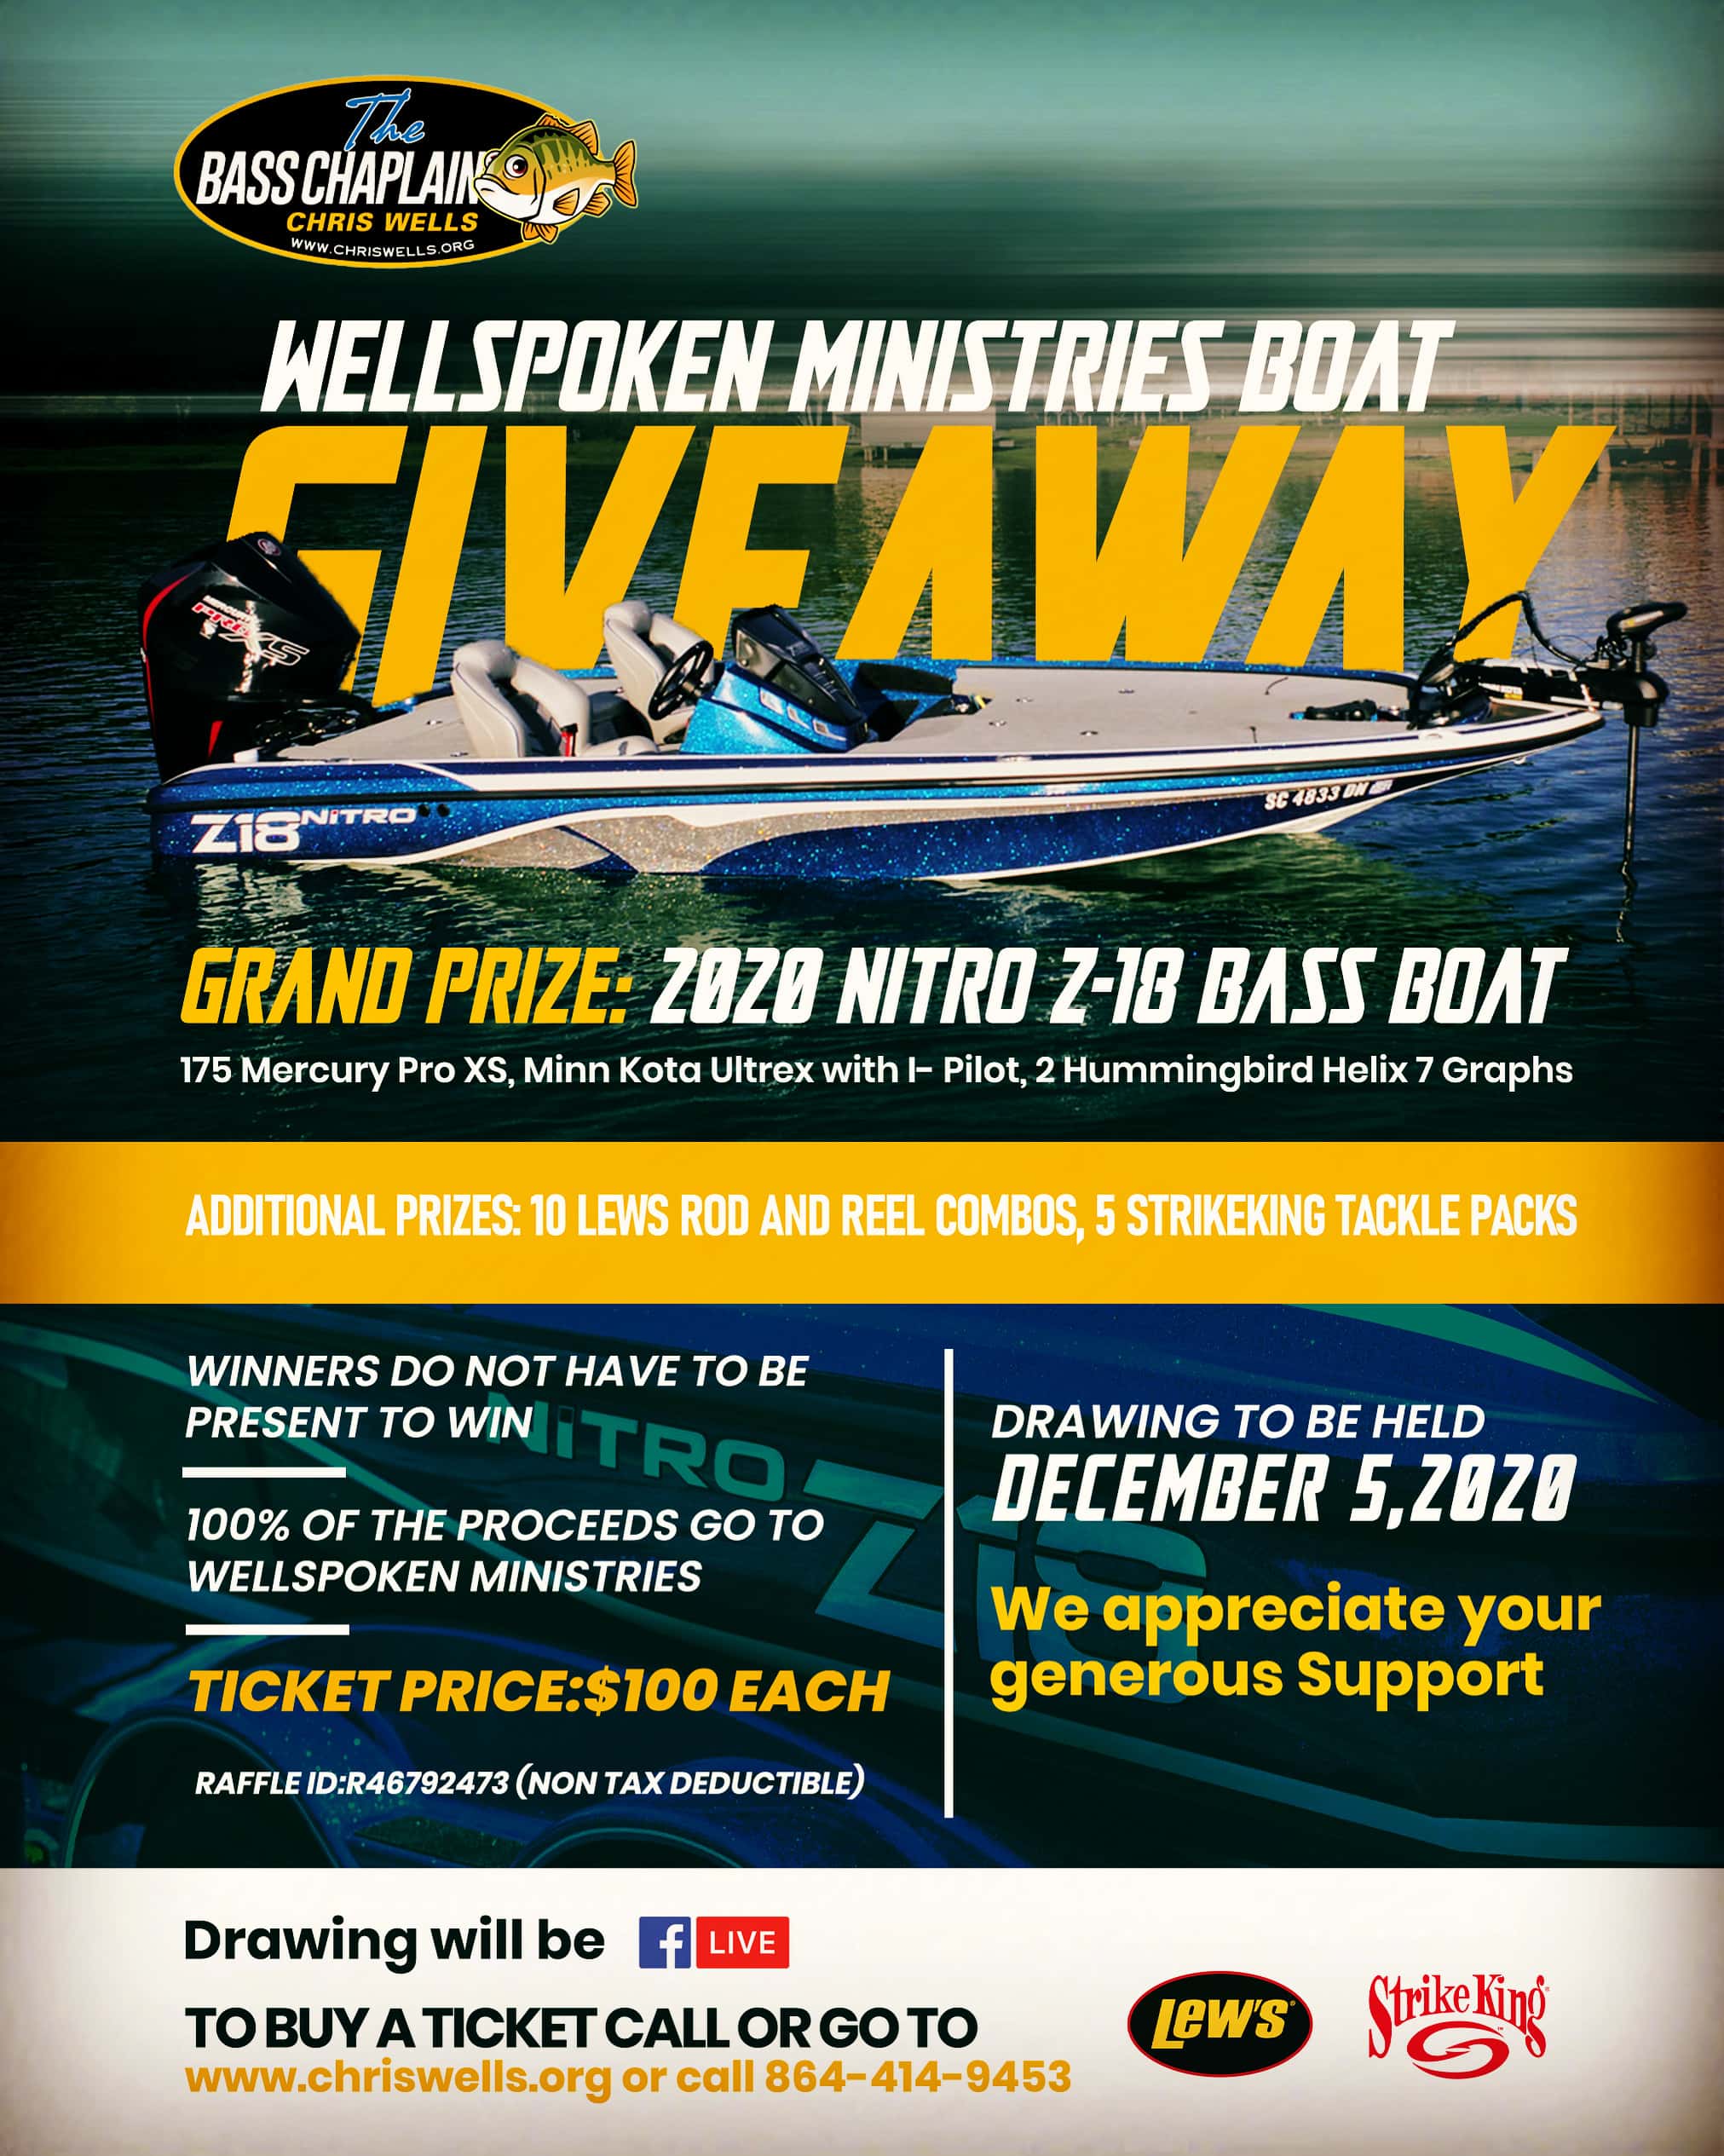 Wellspoken Ministries Boat Giveaway Grand Prize: 2020 Nitro Z-18 Bass Boat